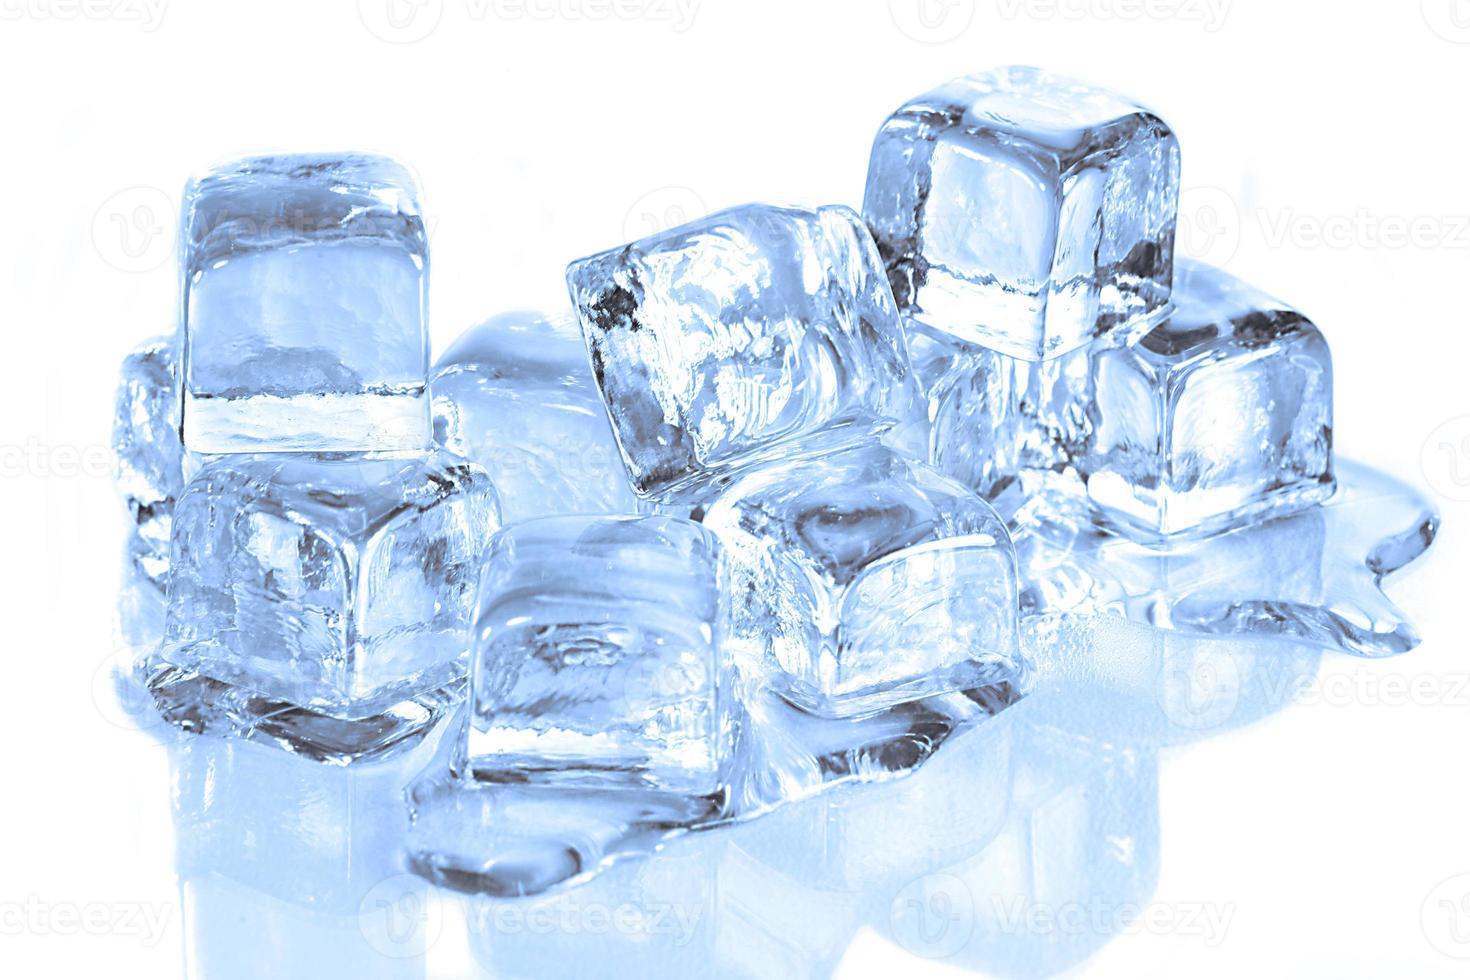 koele ijsblokjes die smelten op een wit reflecterend oppervlak foto